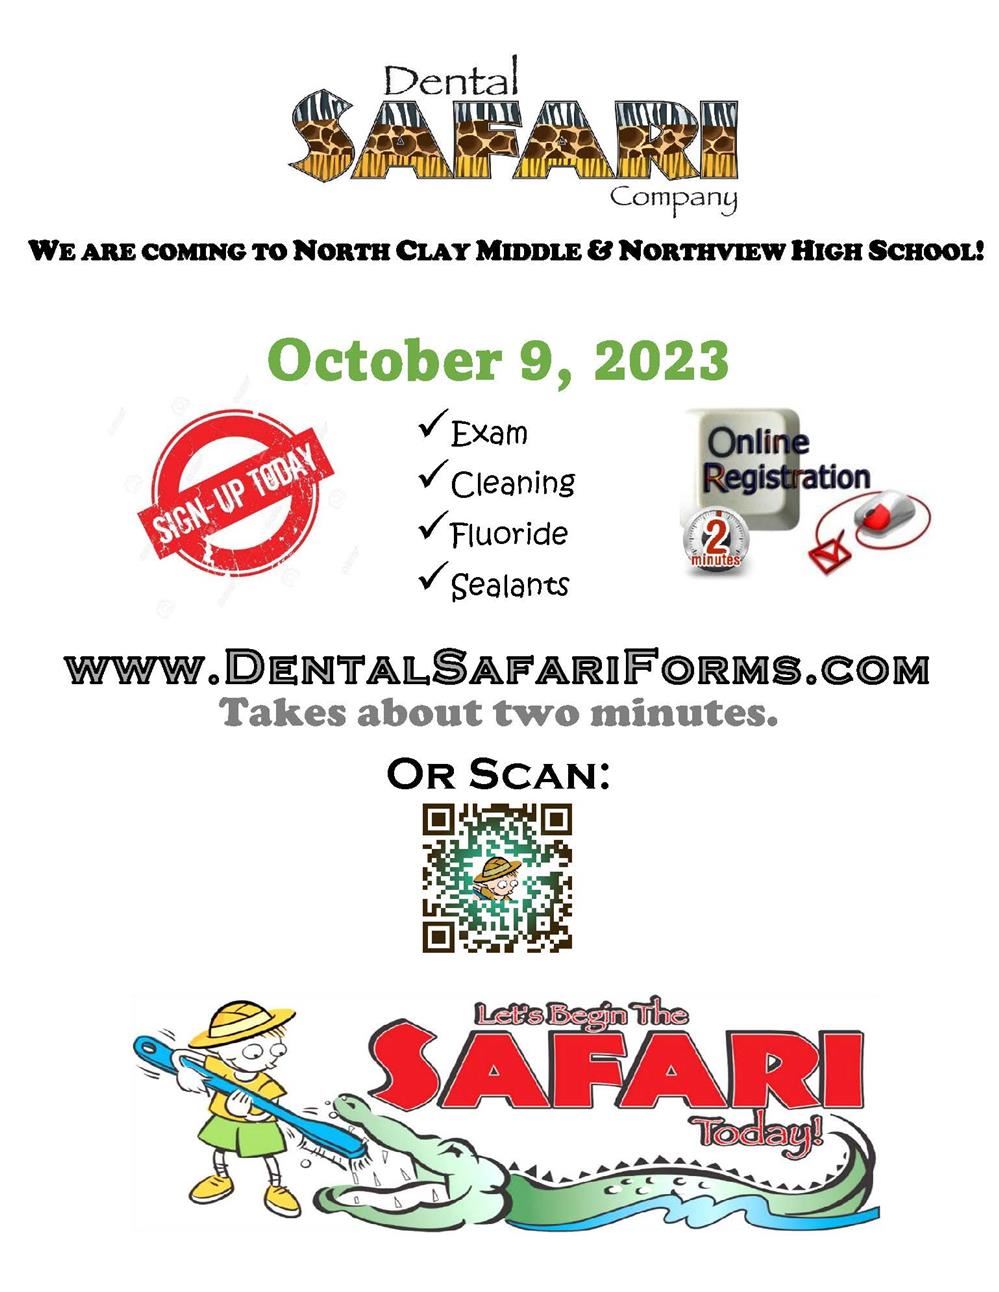  Dental Safari Company 